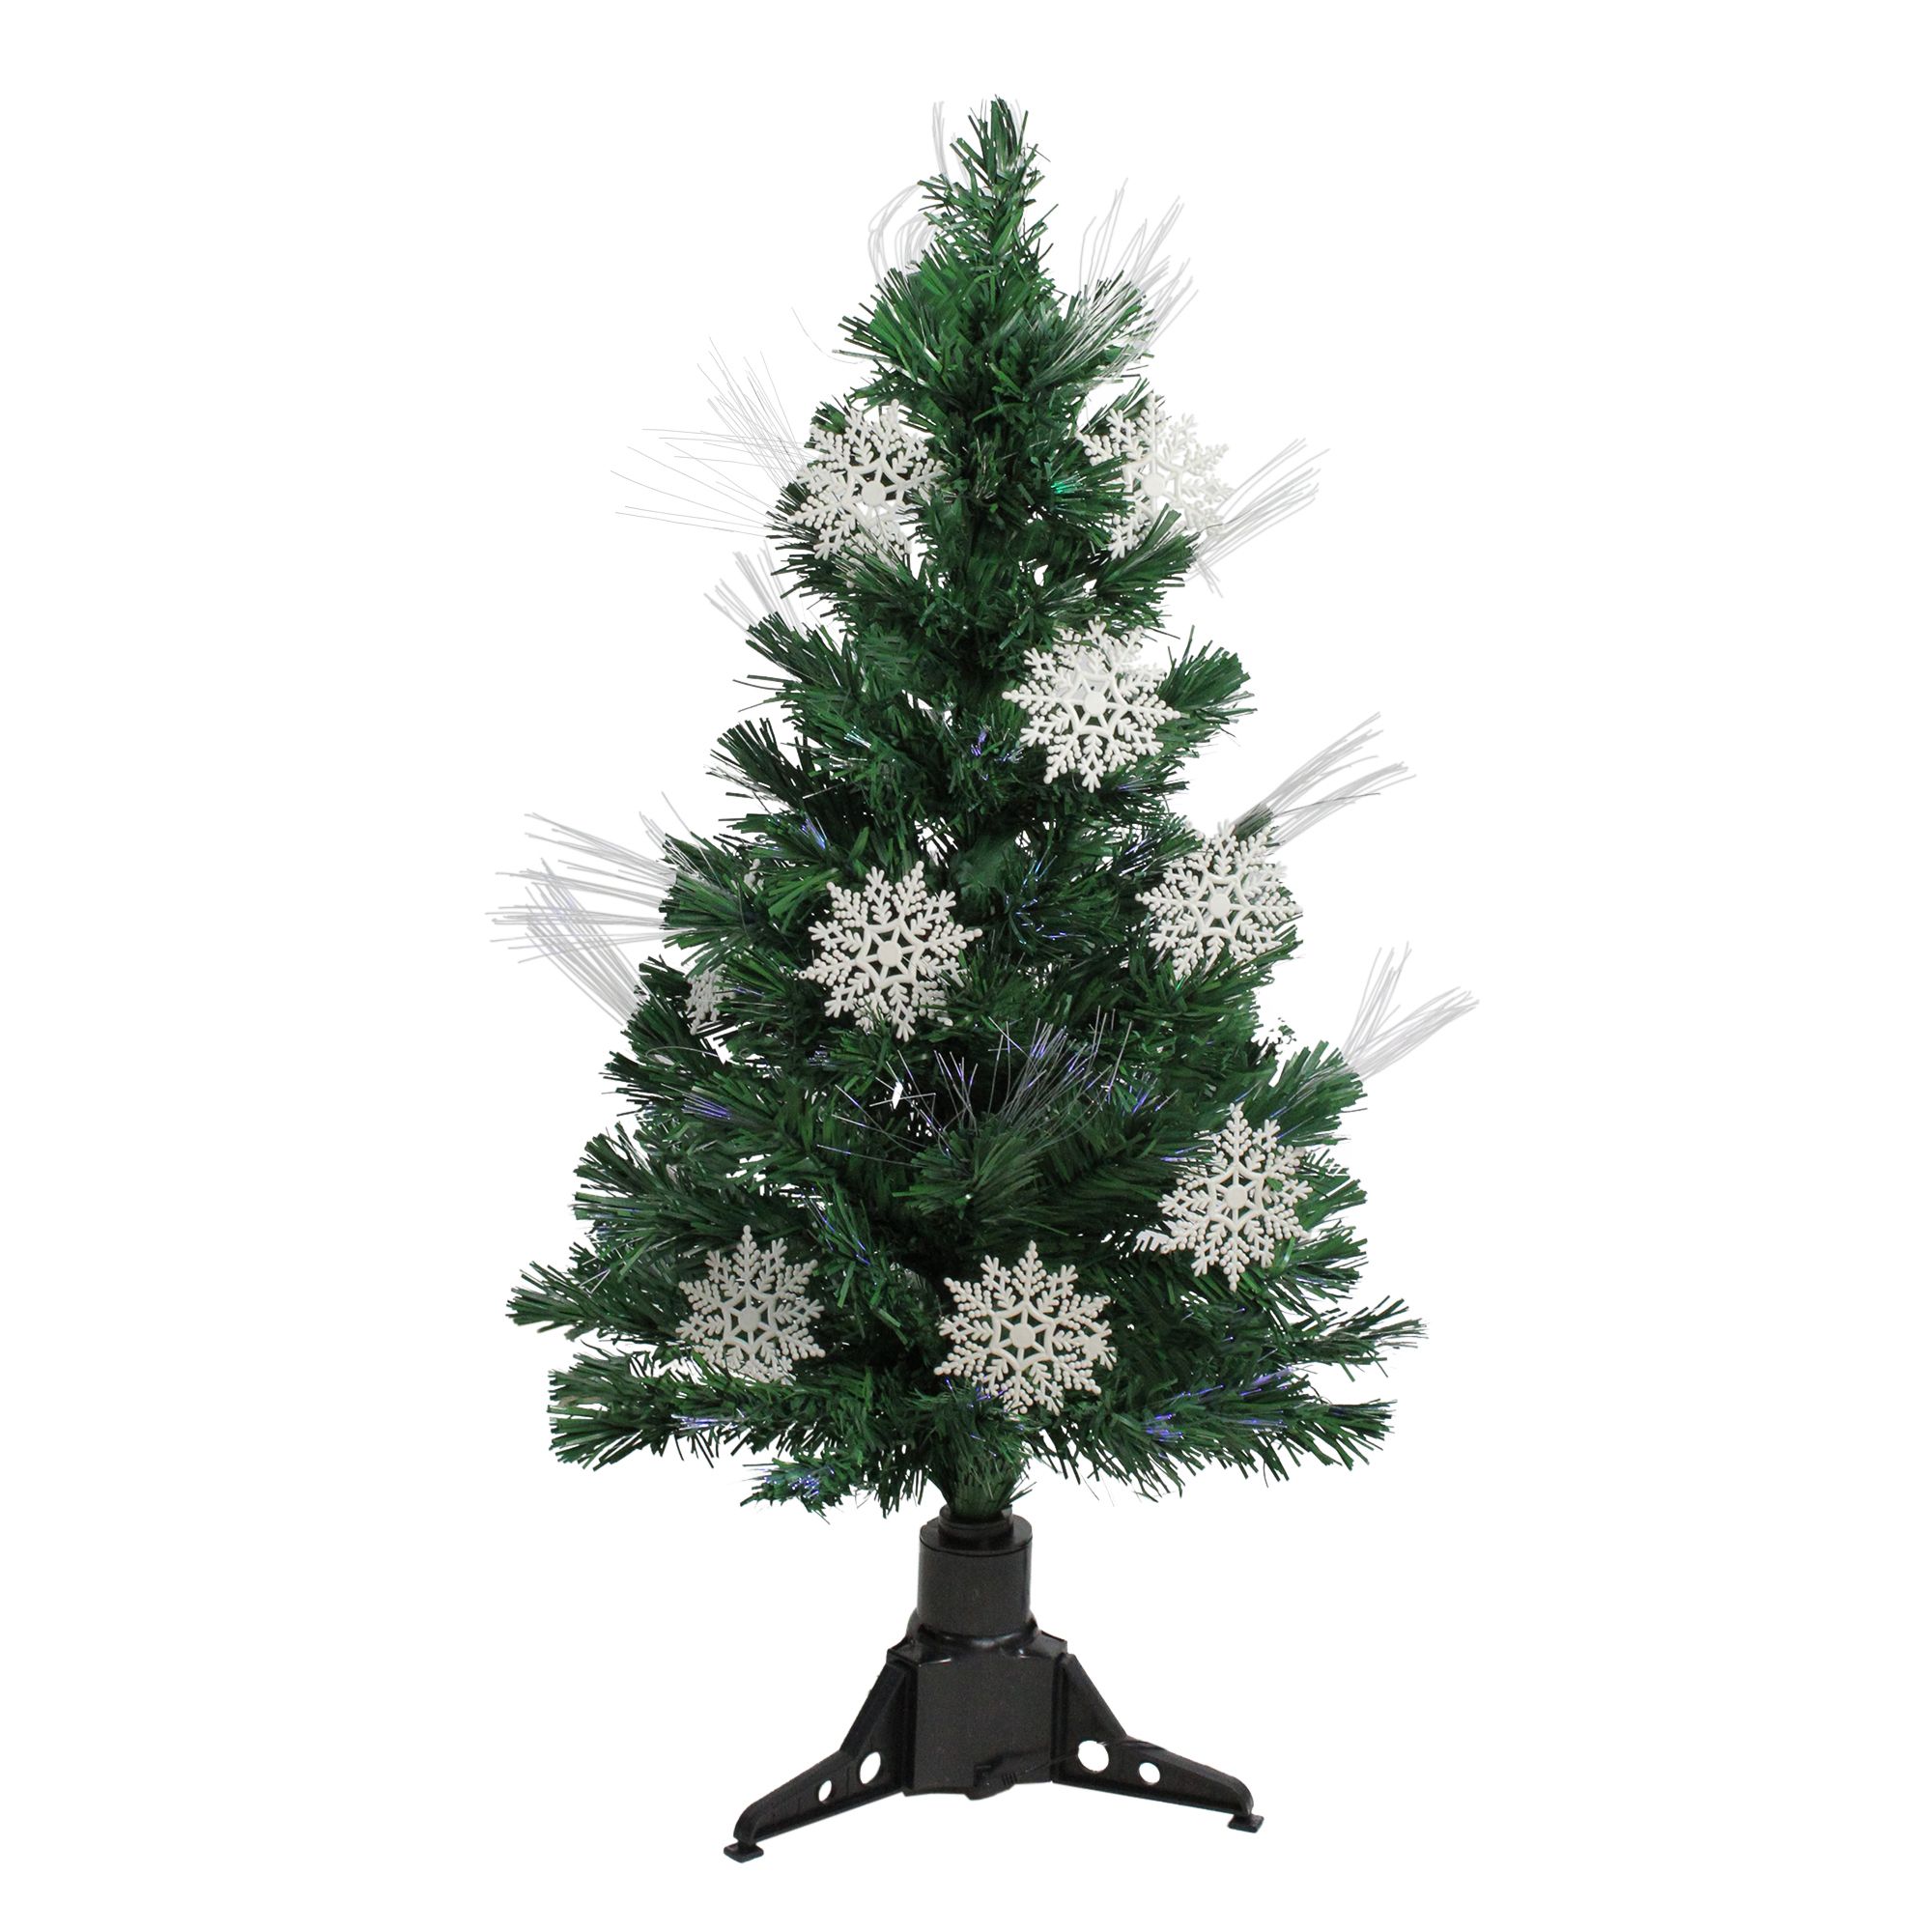 Dak 3' Pre-Lit Fiber Optic Artificial Christmas Tree with White Snowflakes - Multi